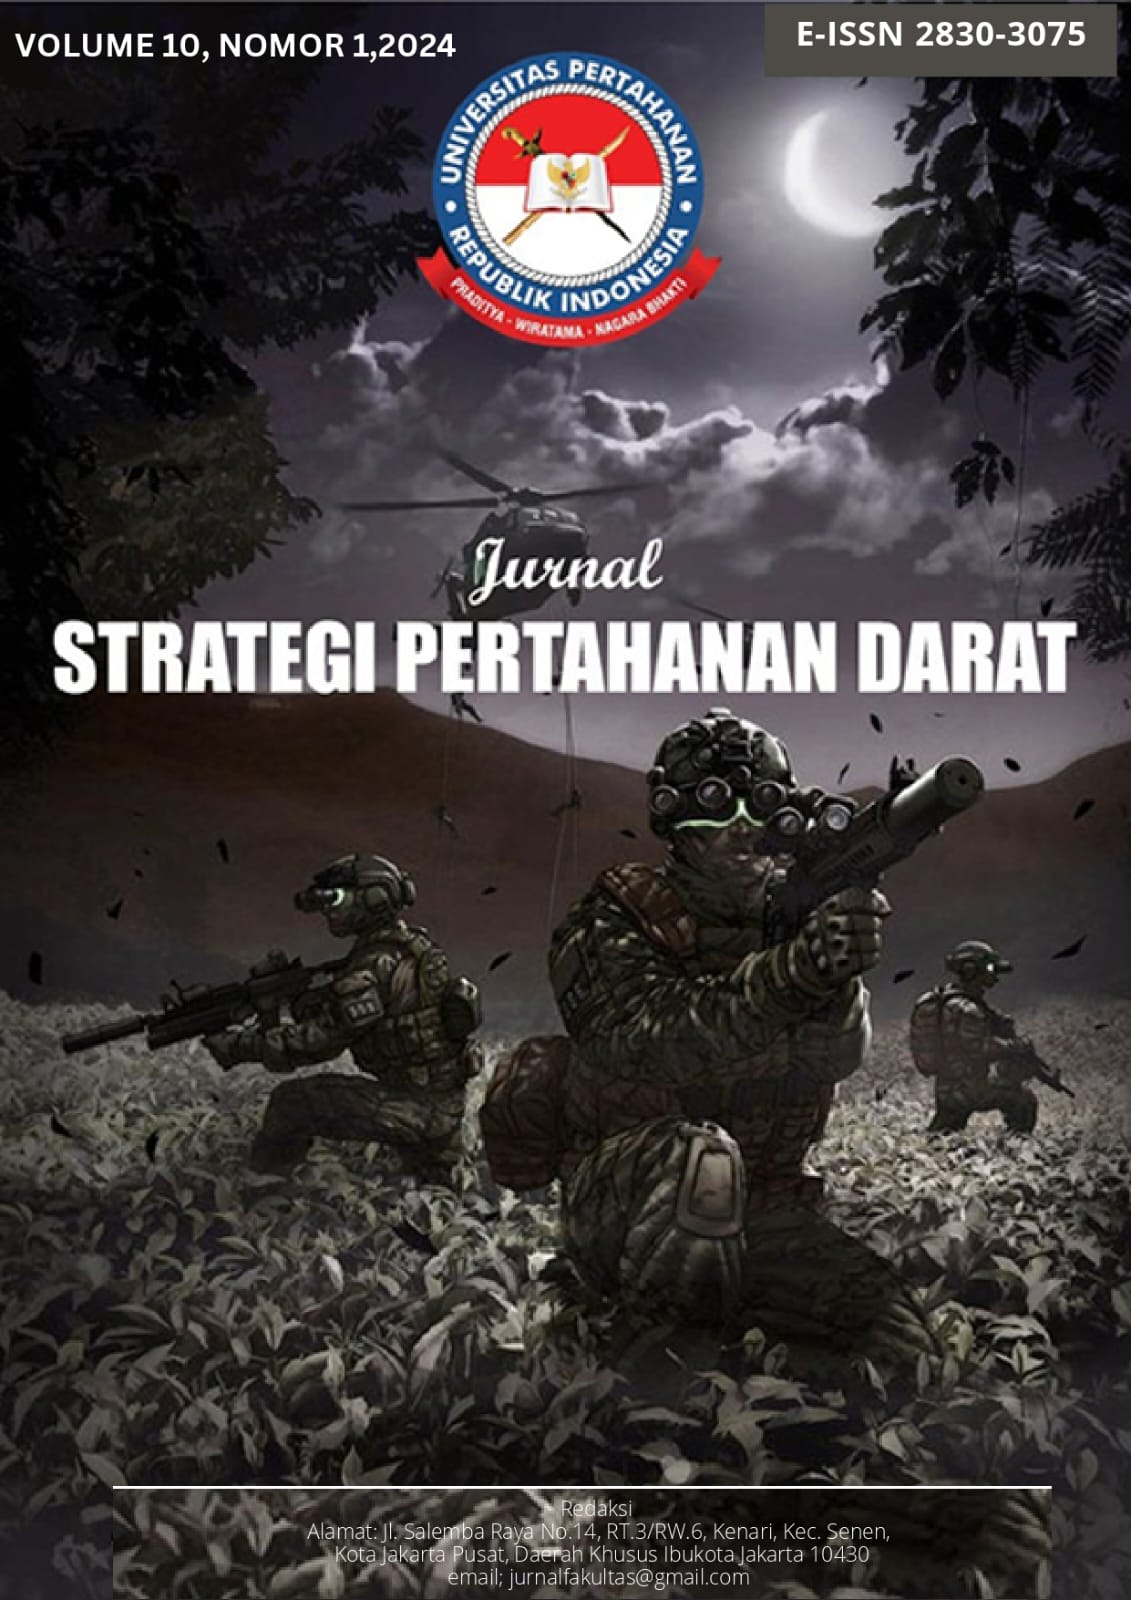 					View Vol. 10 No. 1 (2024): Jurnal Strategi Pertahanan Darat
				